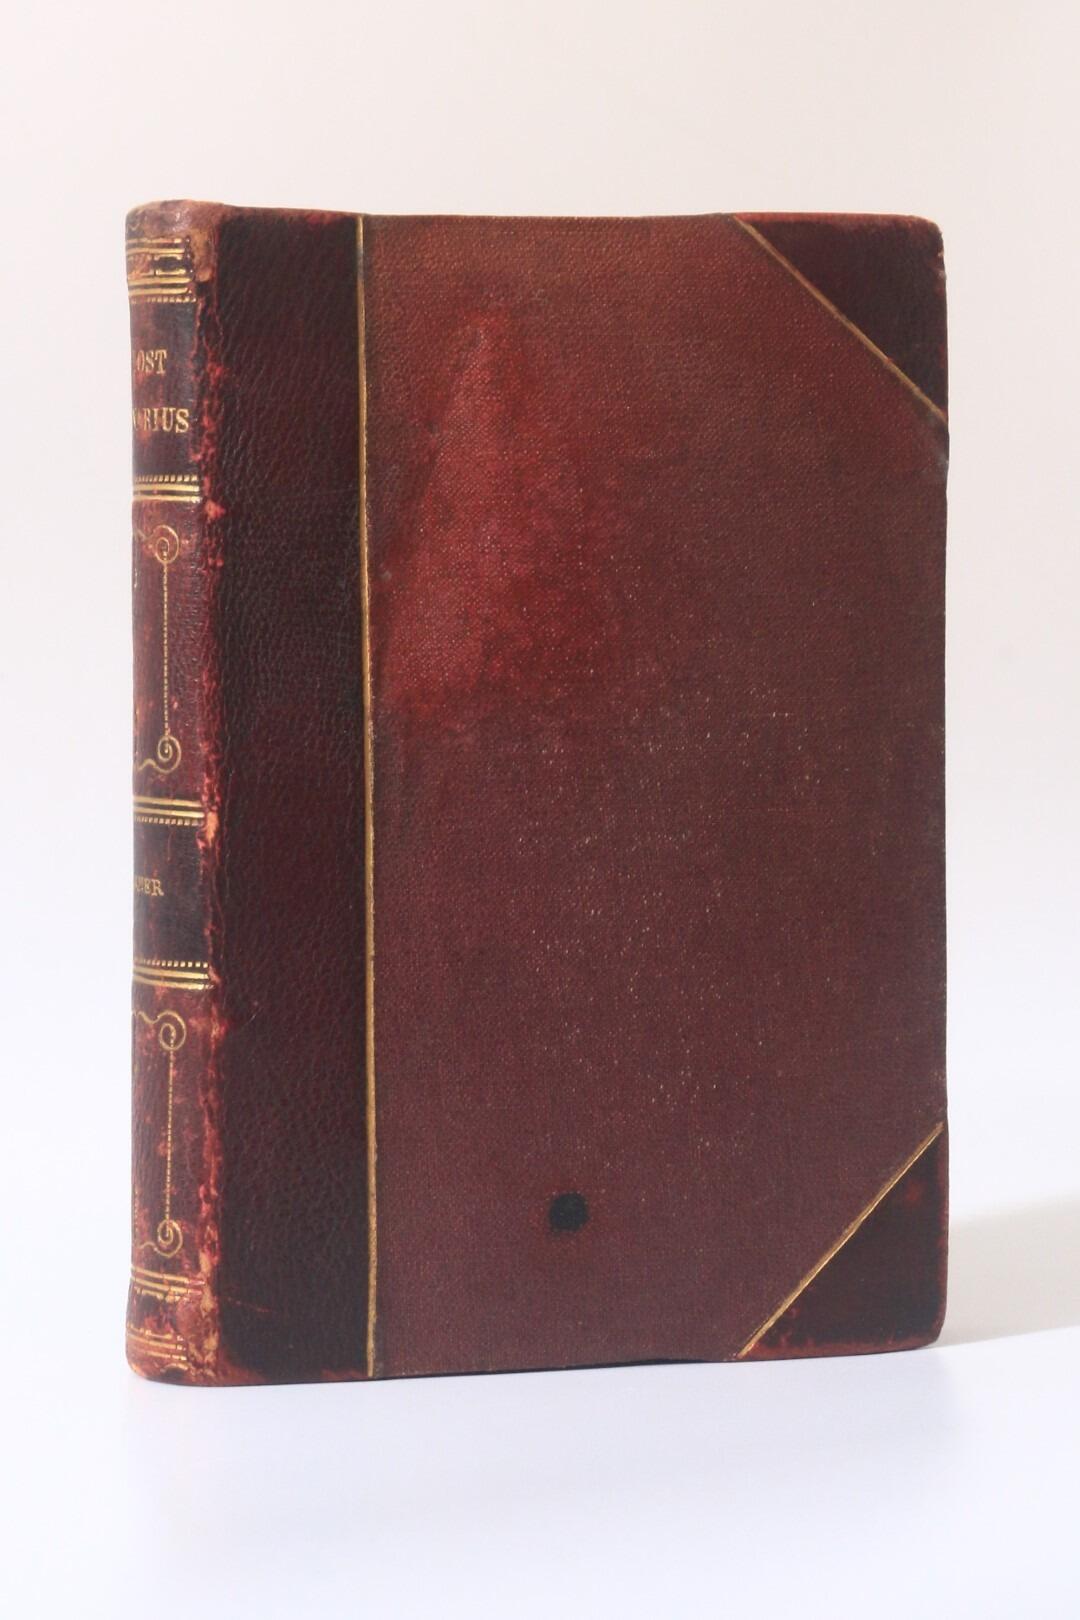 J. Meade Falkner - The Lost Stradivarius - William Blackwood, 1895, First Edition.